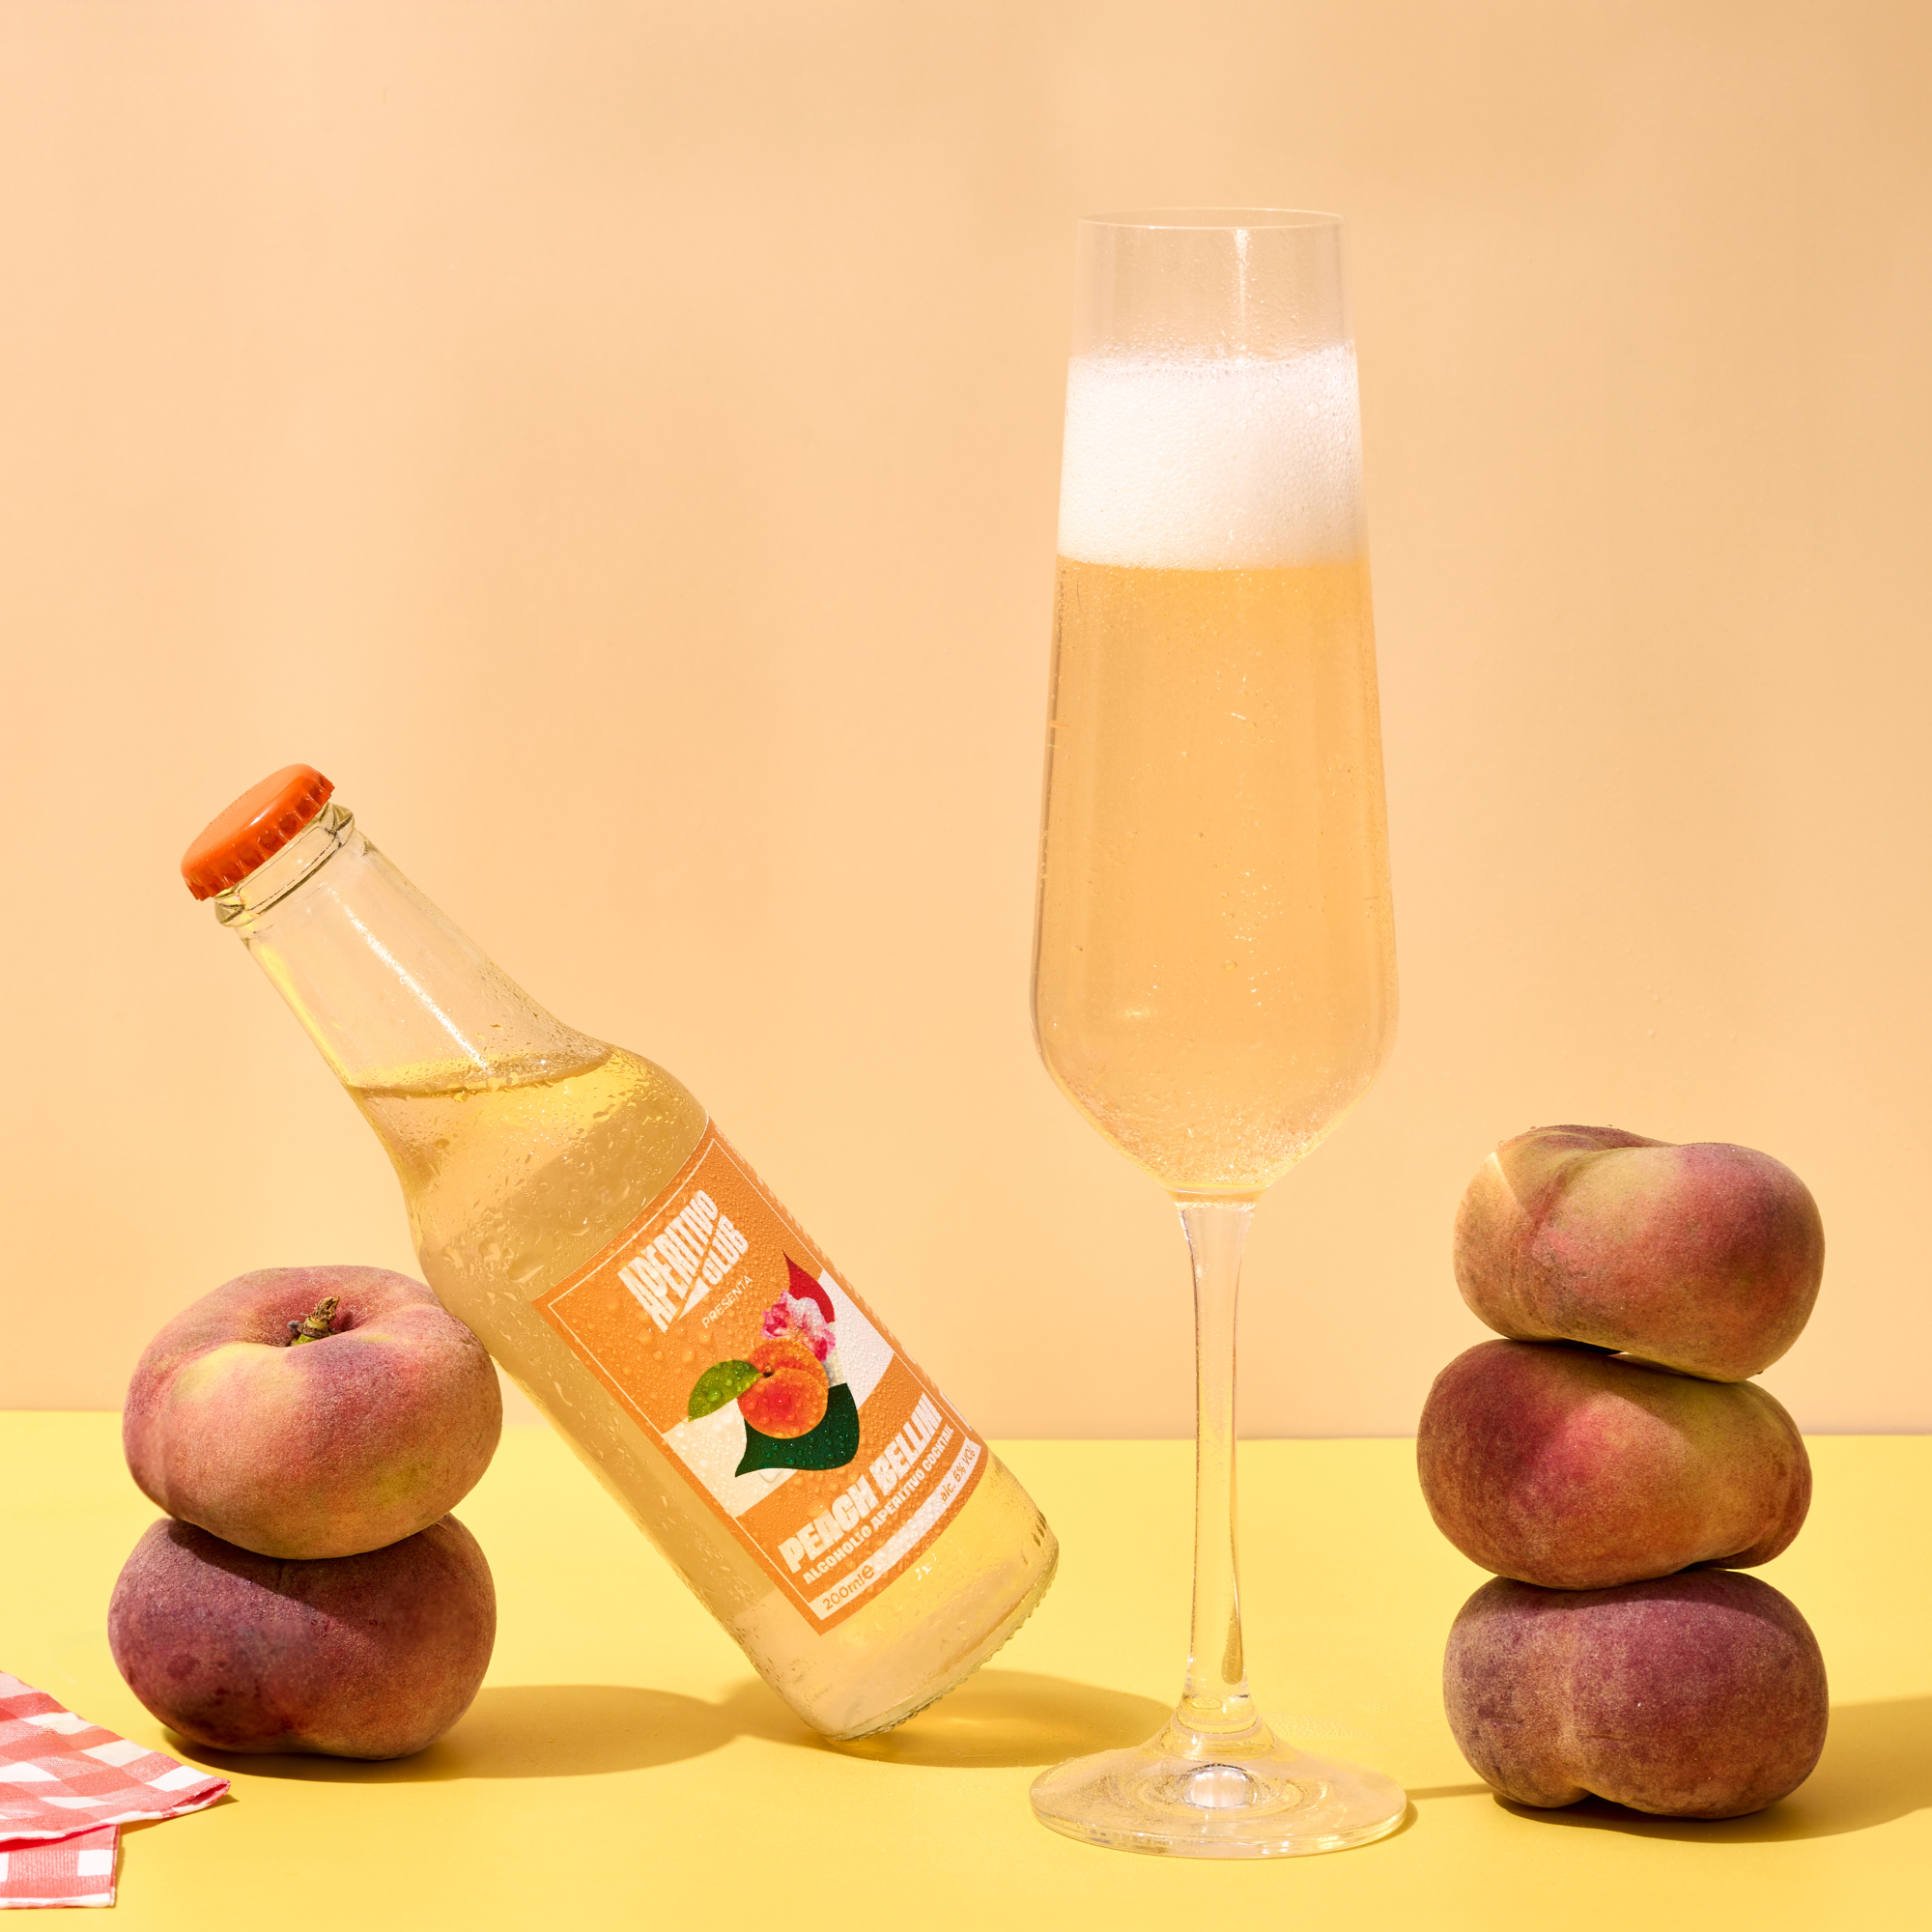 peach bellini aperitivo spritz and cocktail image 2